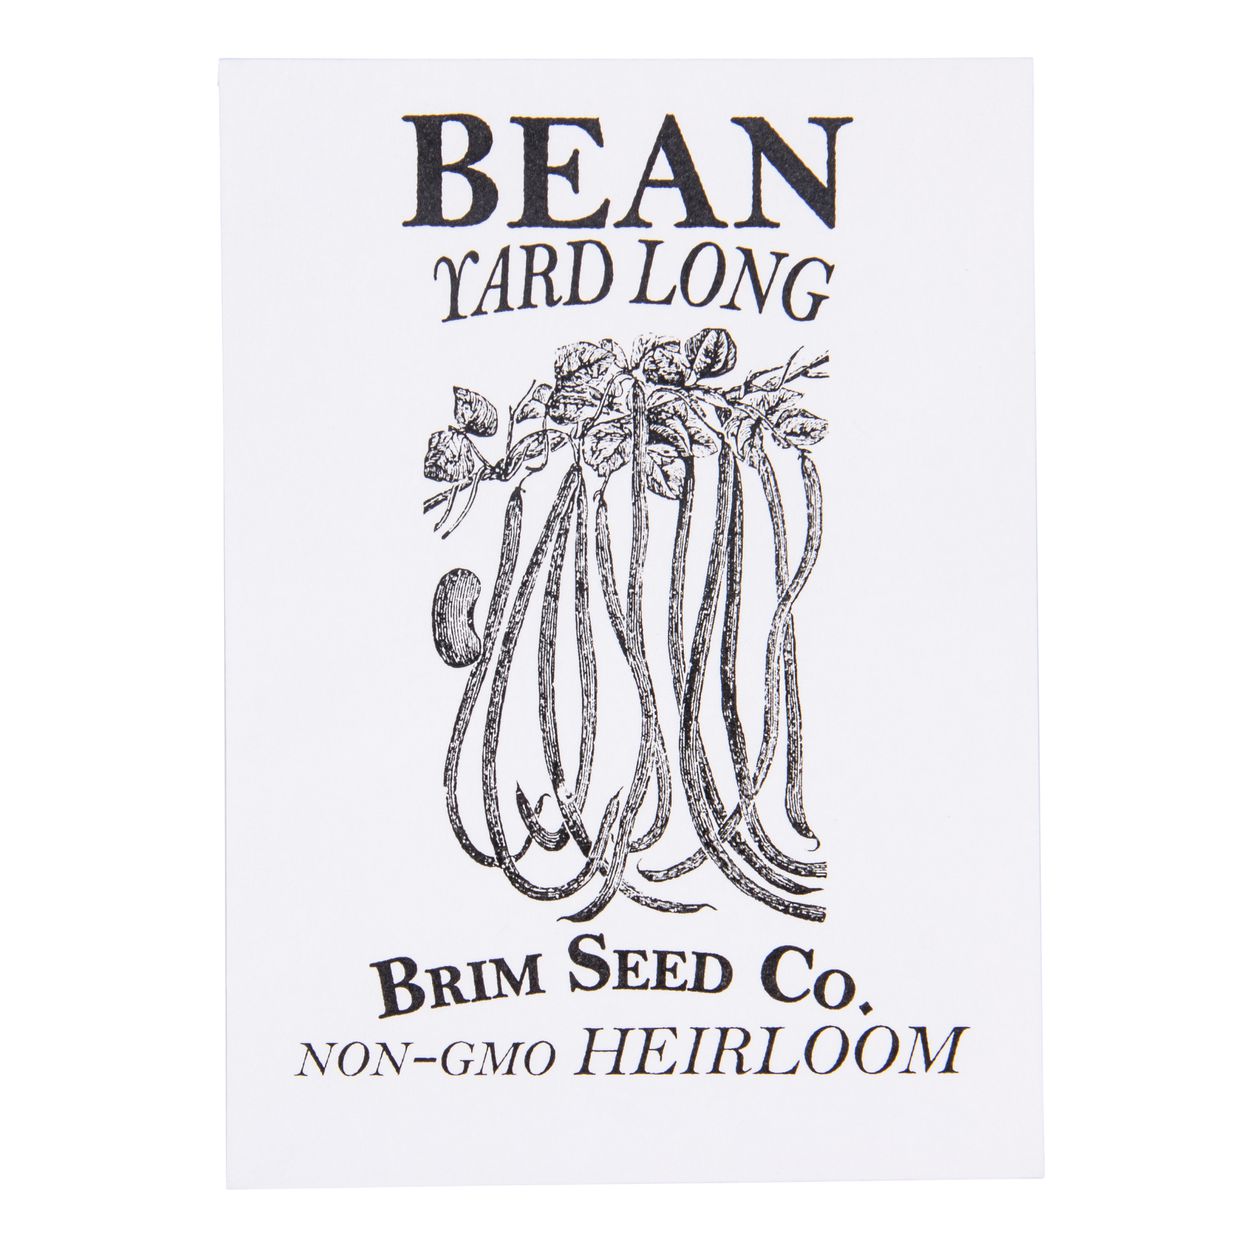 Brim Seed Co. - Yard Long Bean Heirloom Seed